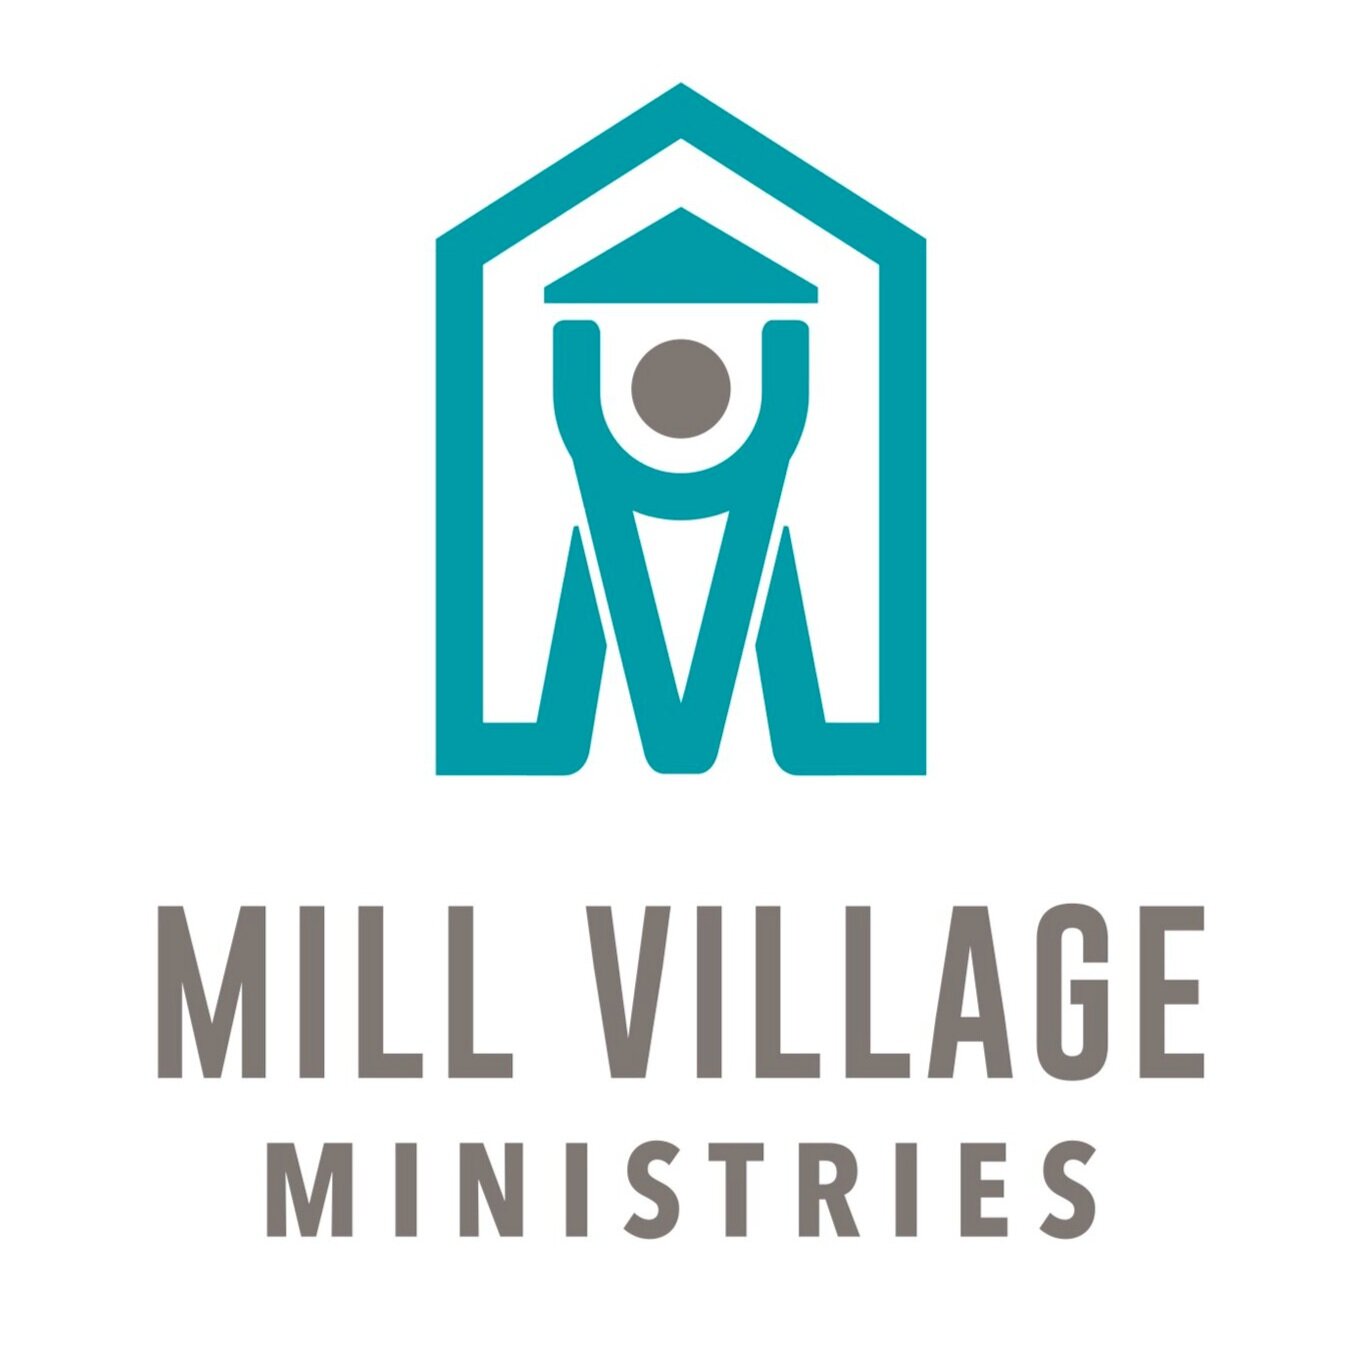 Mill Community Ministries